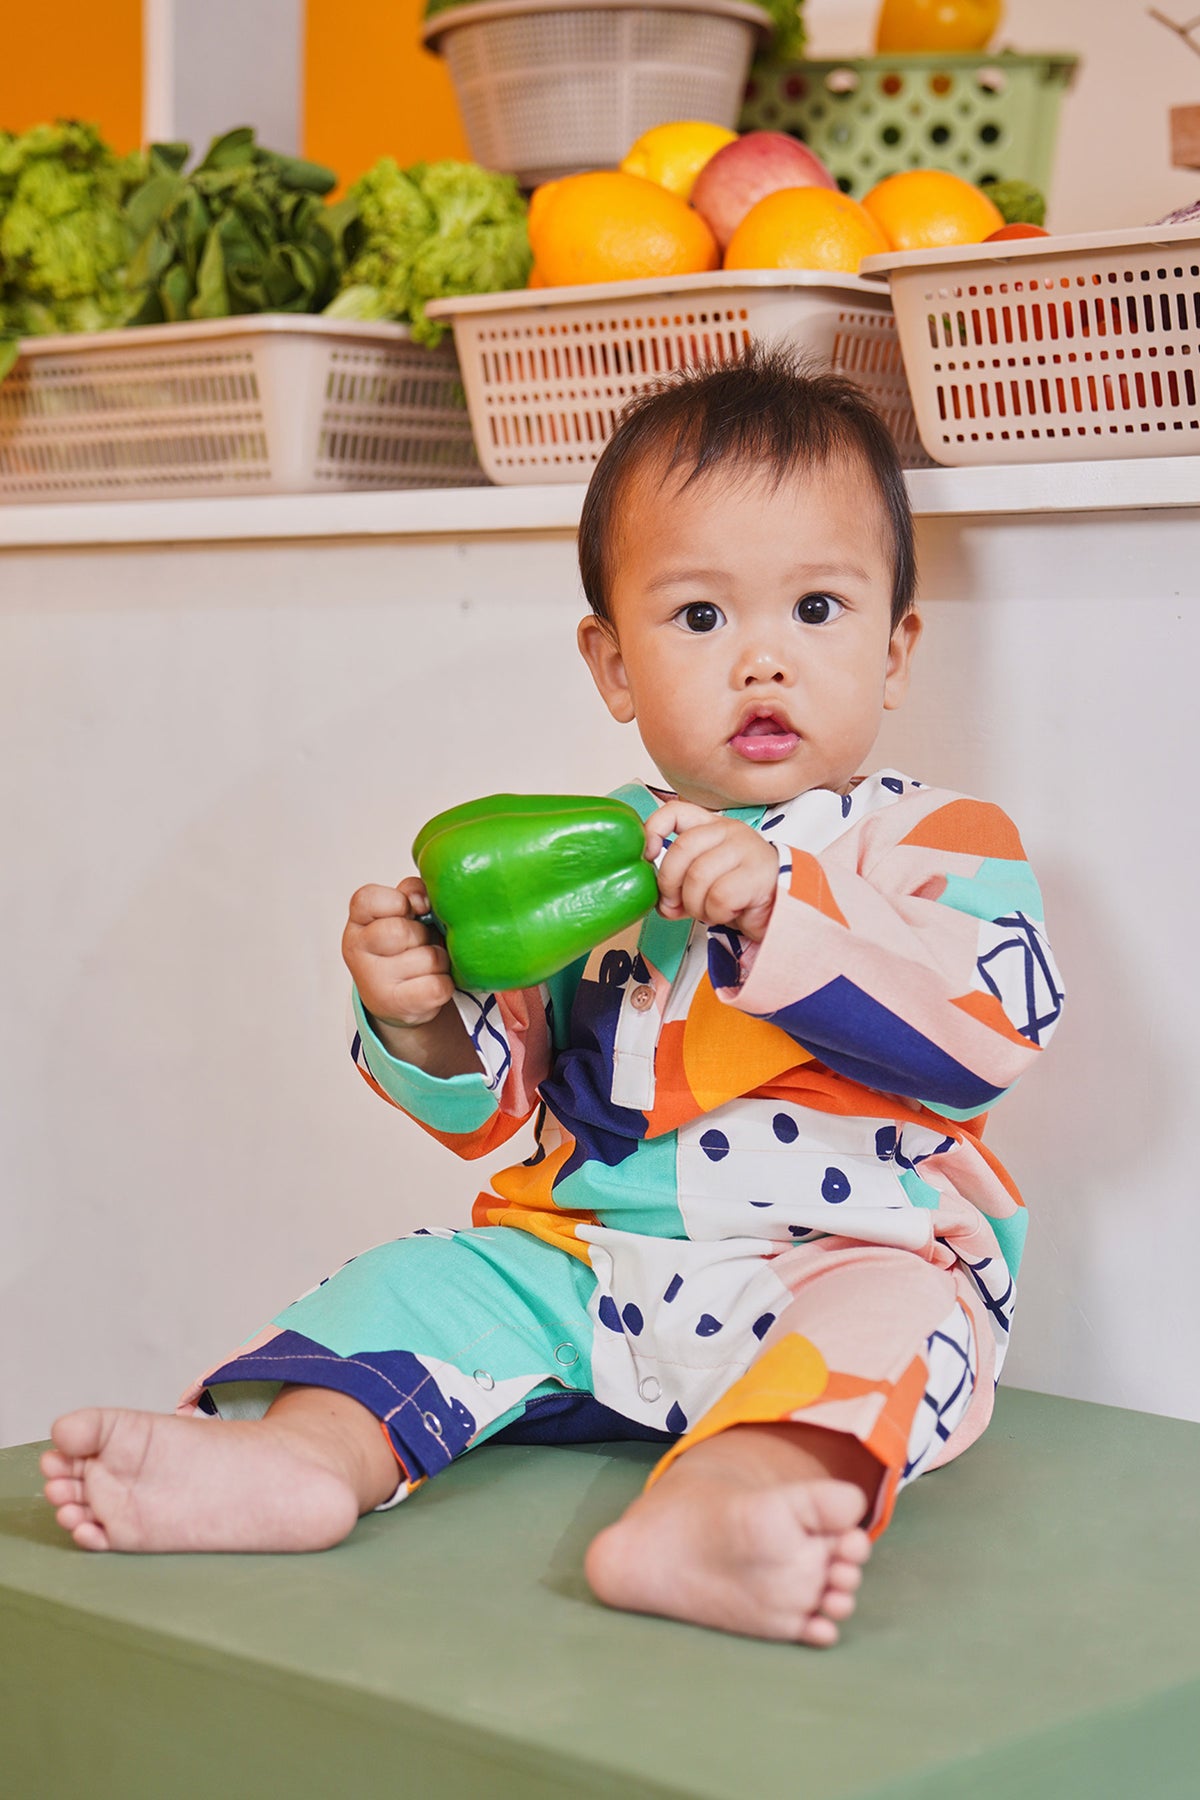 Baju raya family sedondon baby jumpsuit fruitpunch print